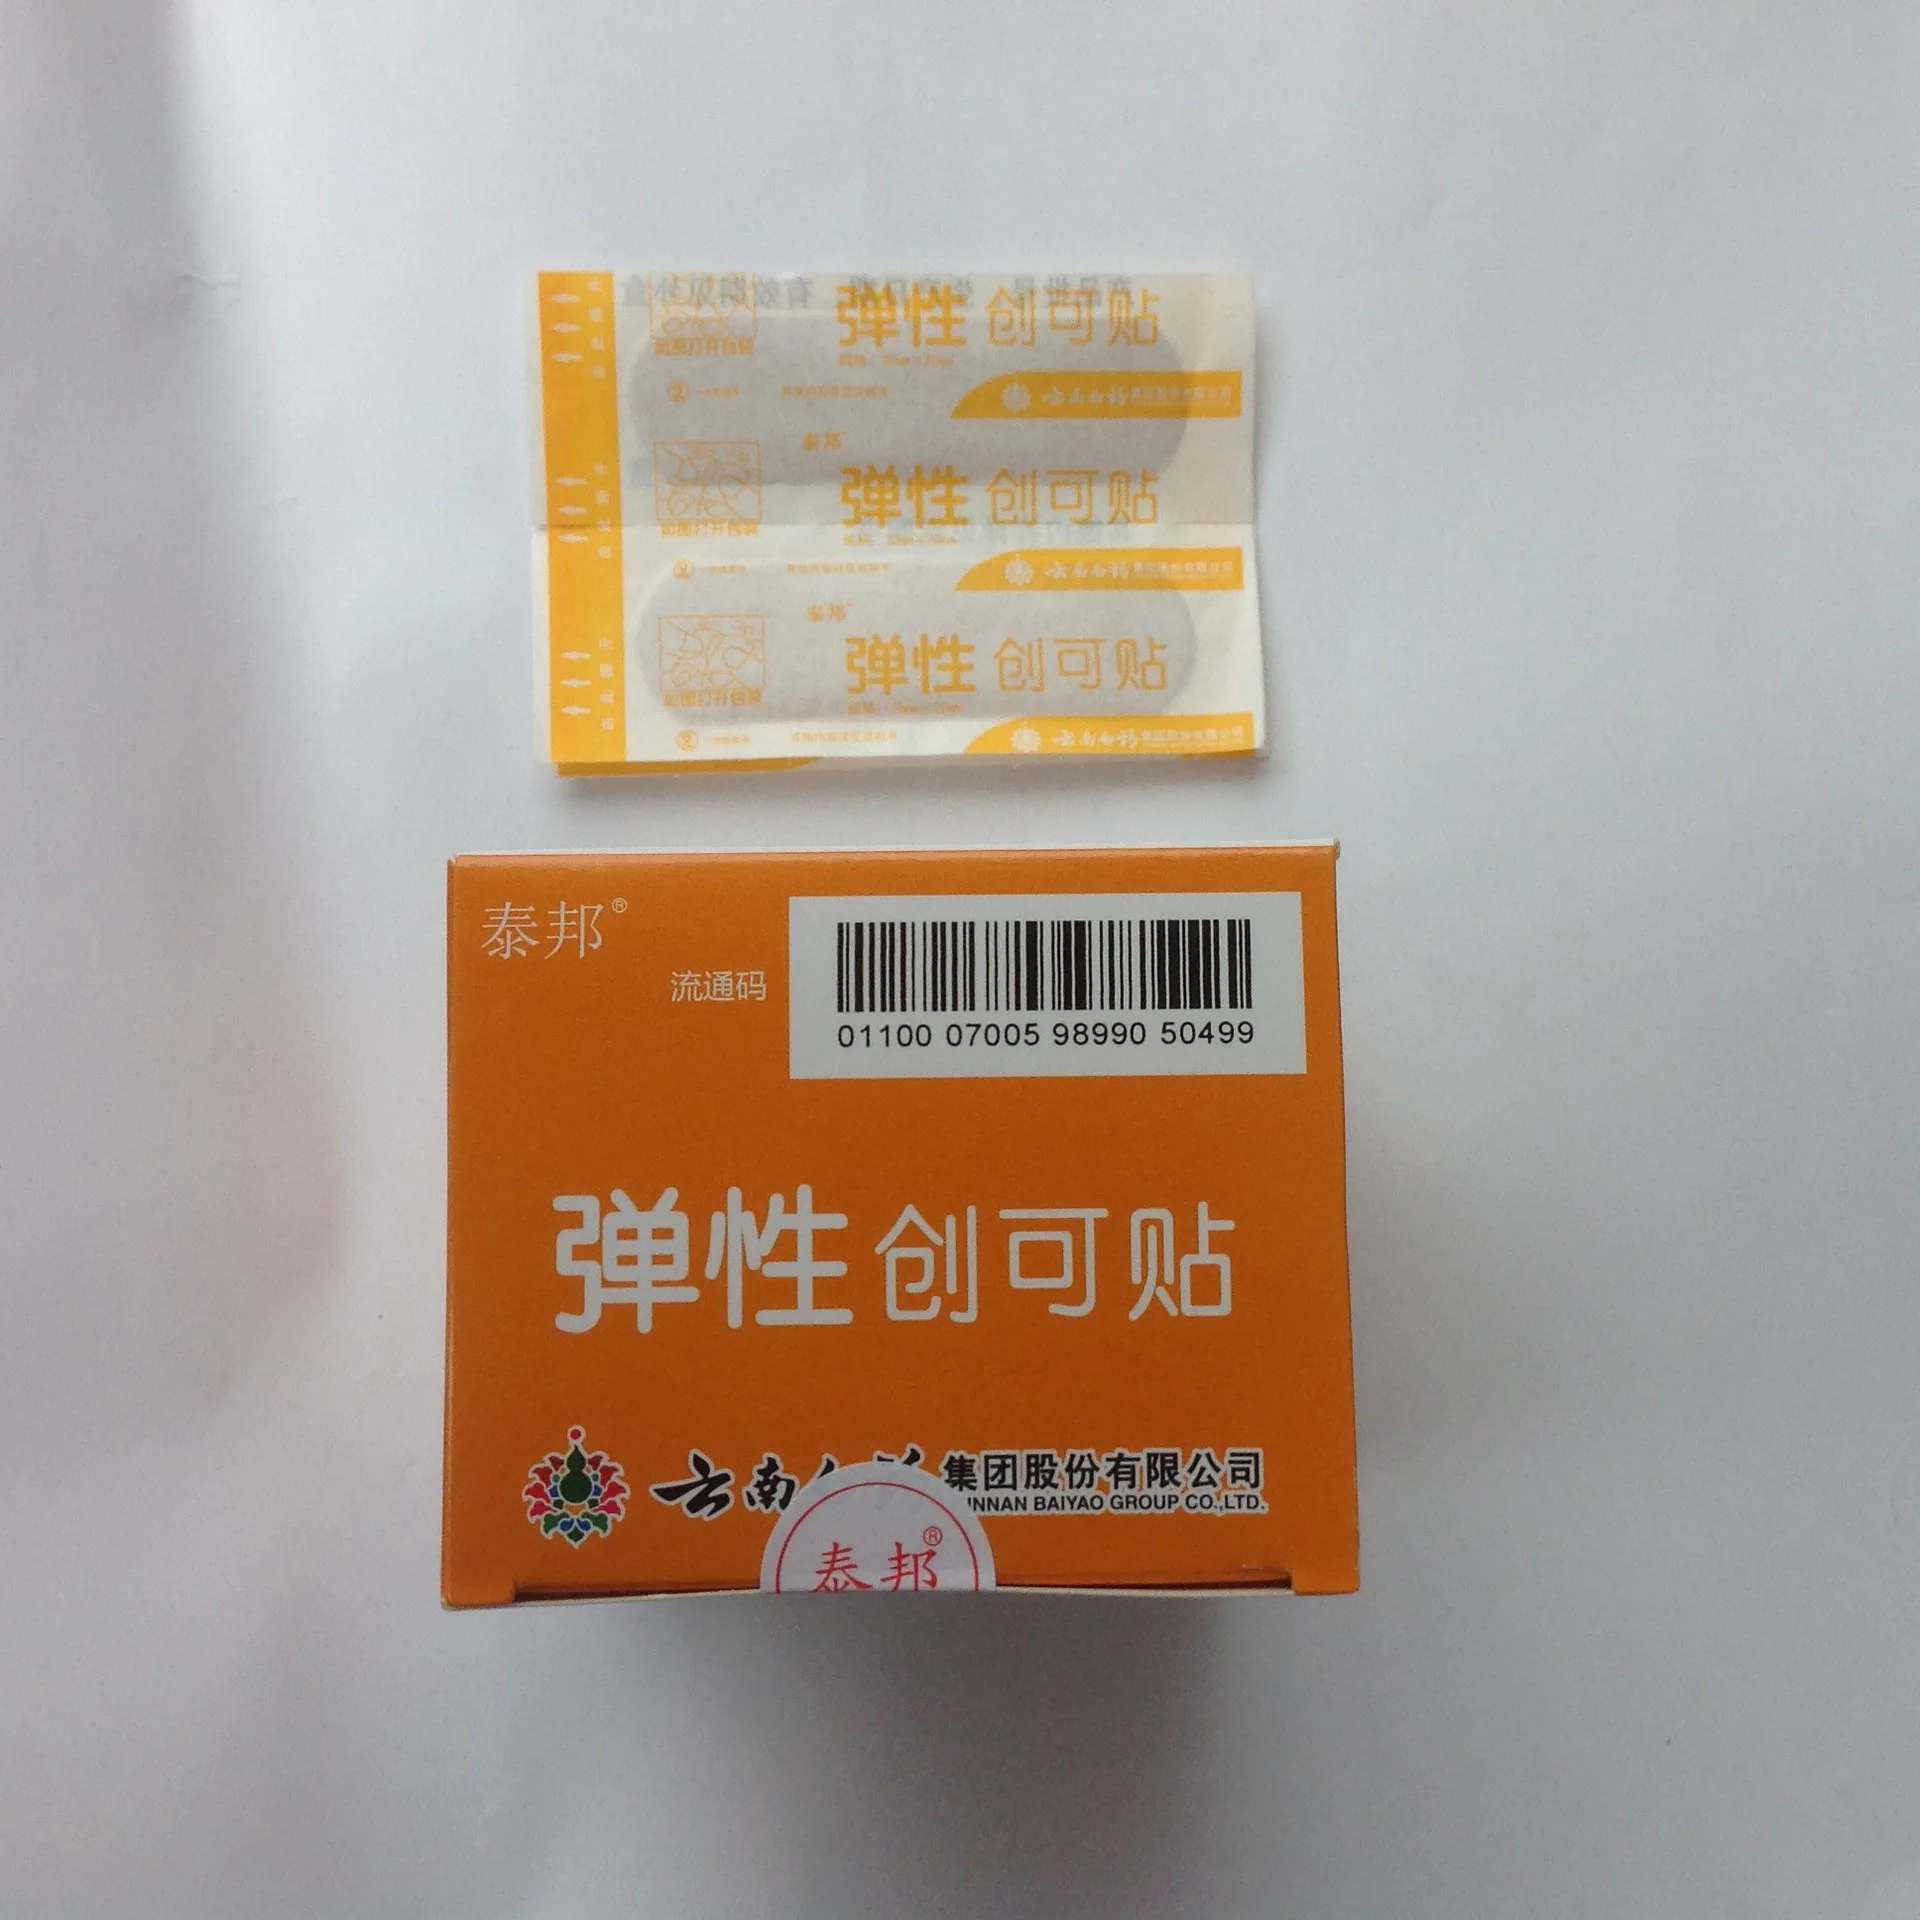 Yunnan Baiyao Band-Aid Elastic Household Outdoor Survival Wound Dressing Sterilization and Ventilation 100 pcs